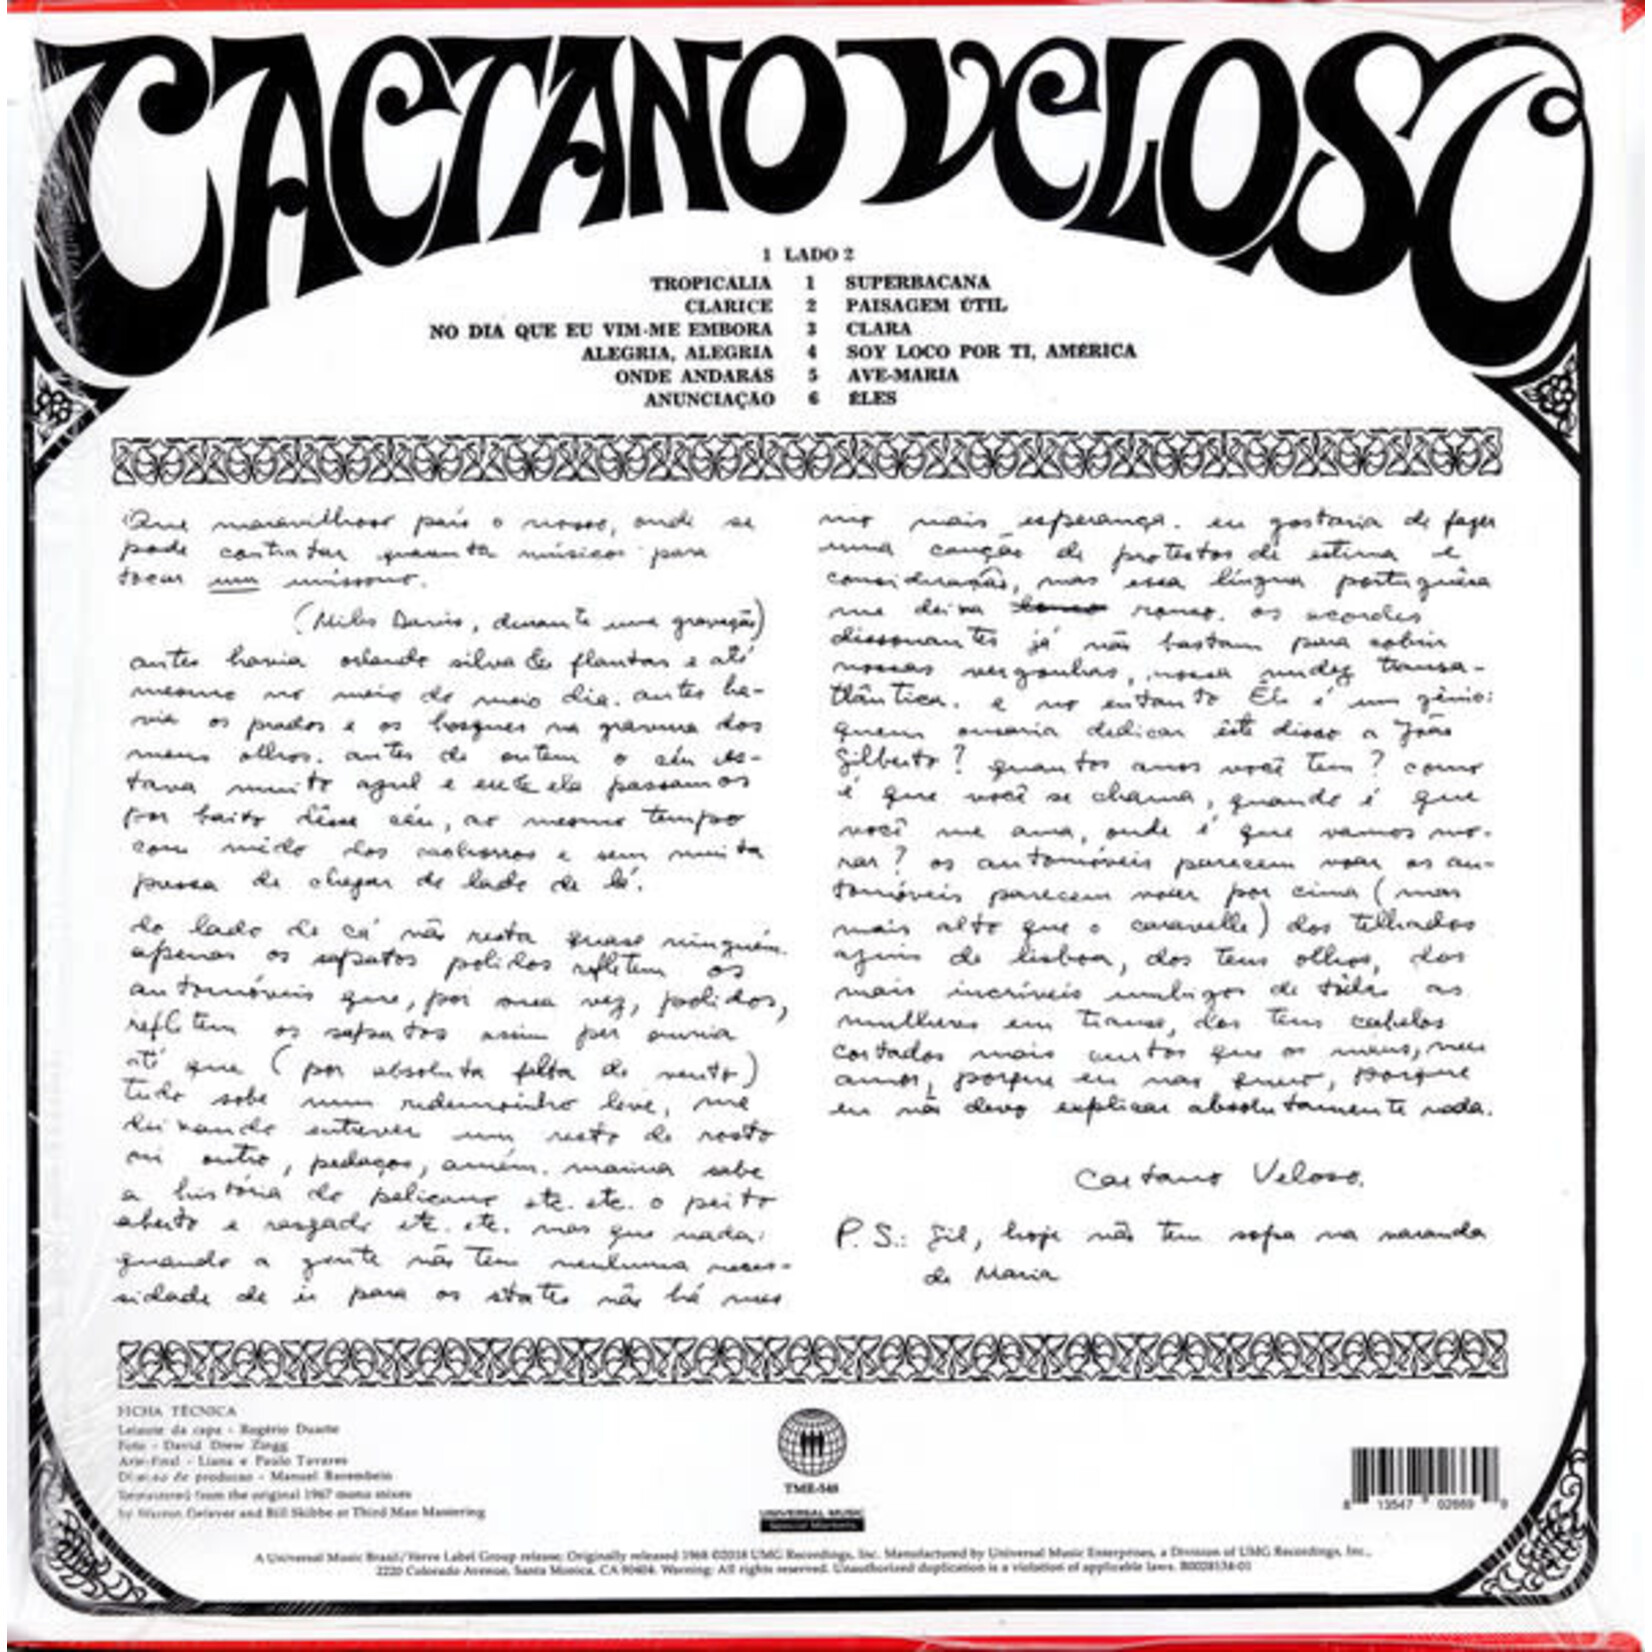 Third Man Caetano Veloso - Caetano Veloso (LP)